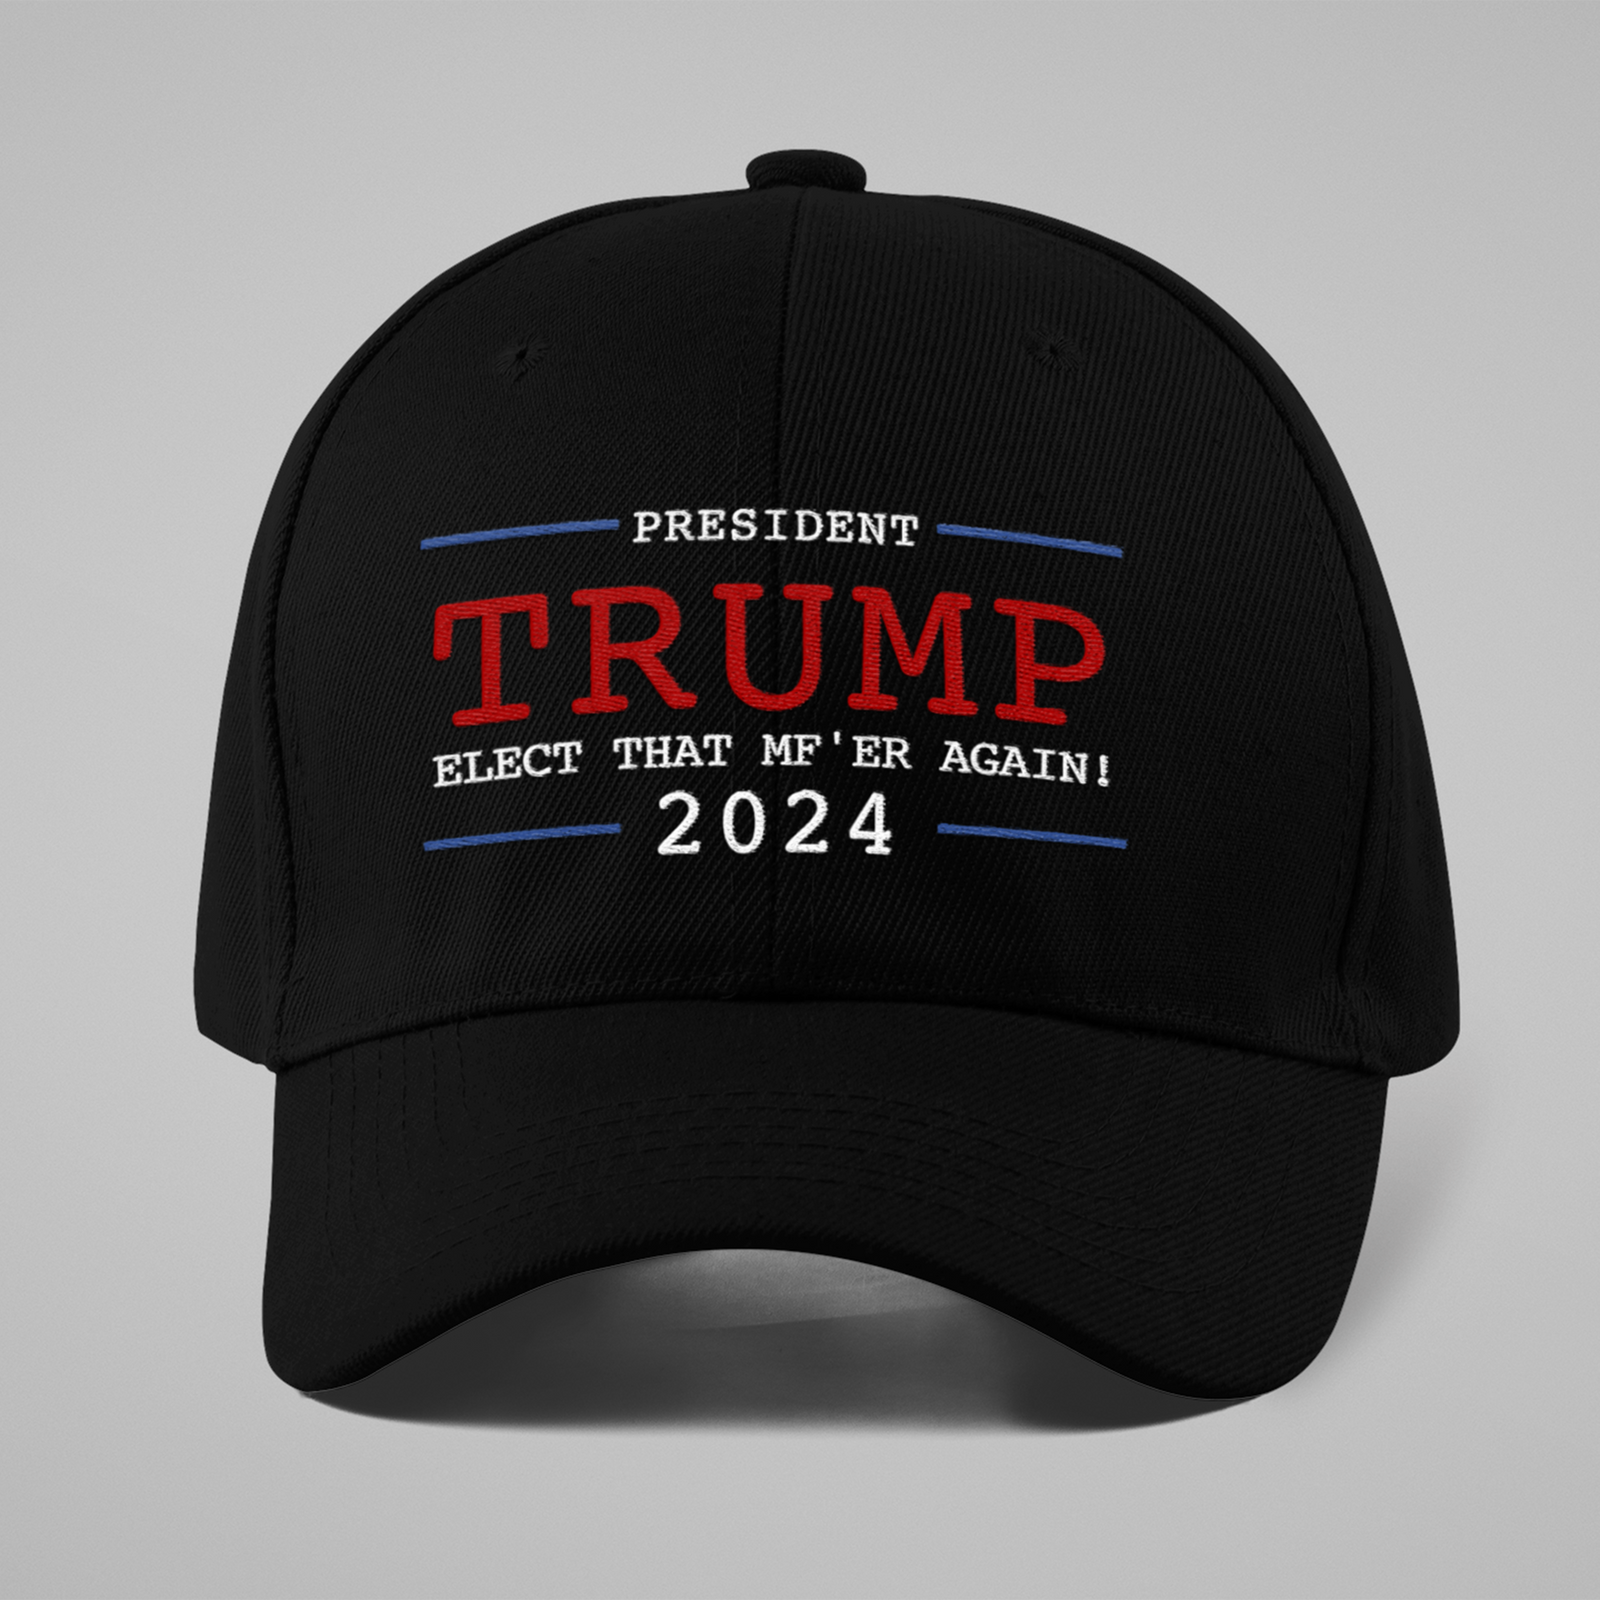 Trump Elect That Mf'er Again Embroidered Cap - GB-C02